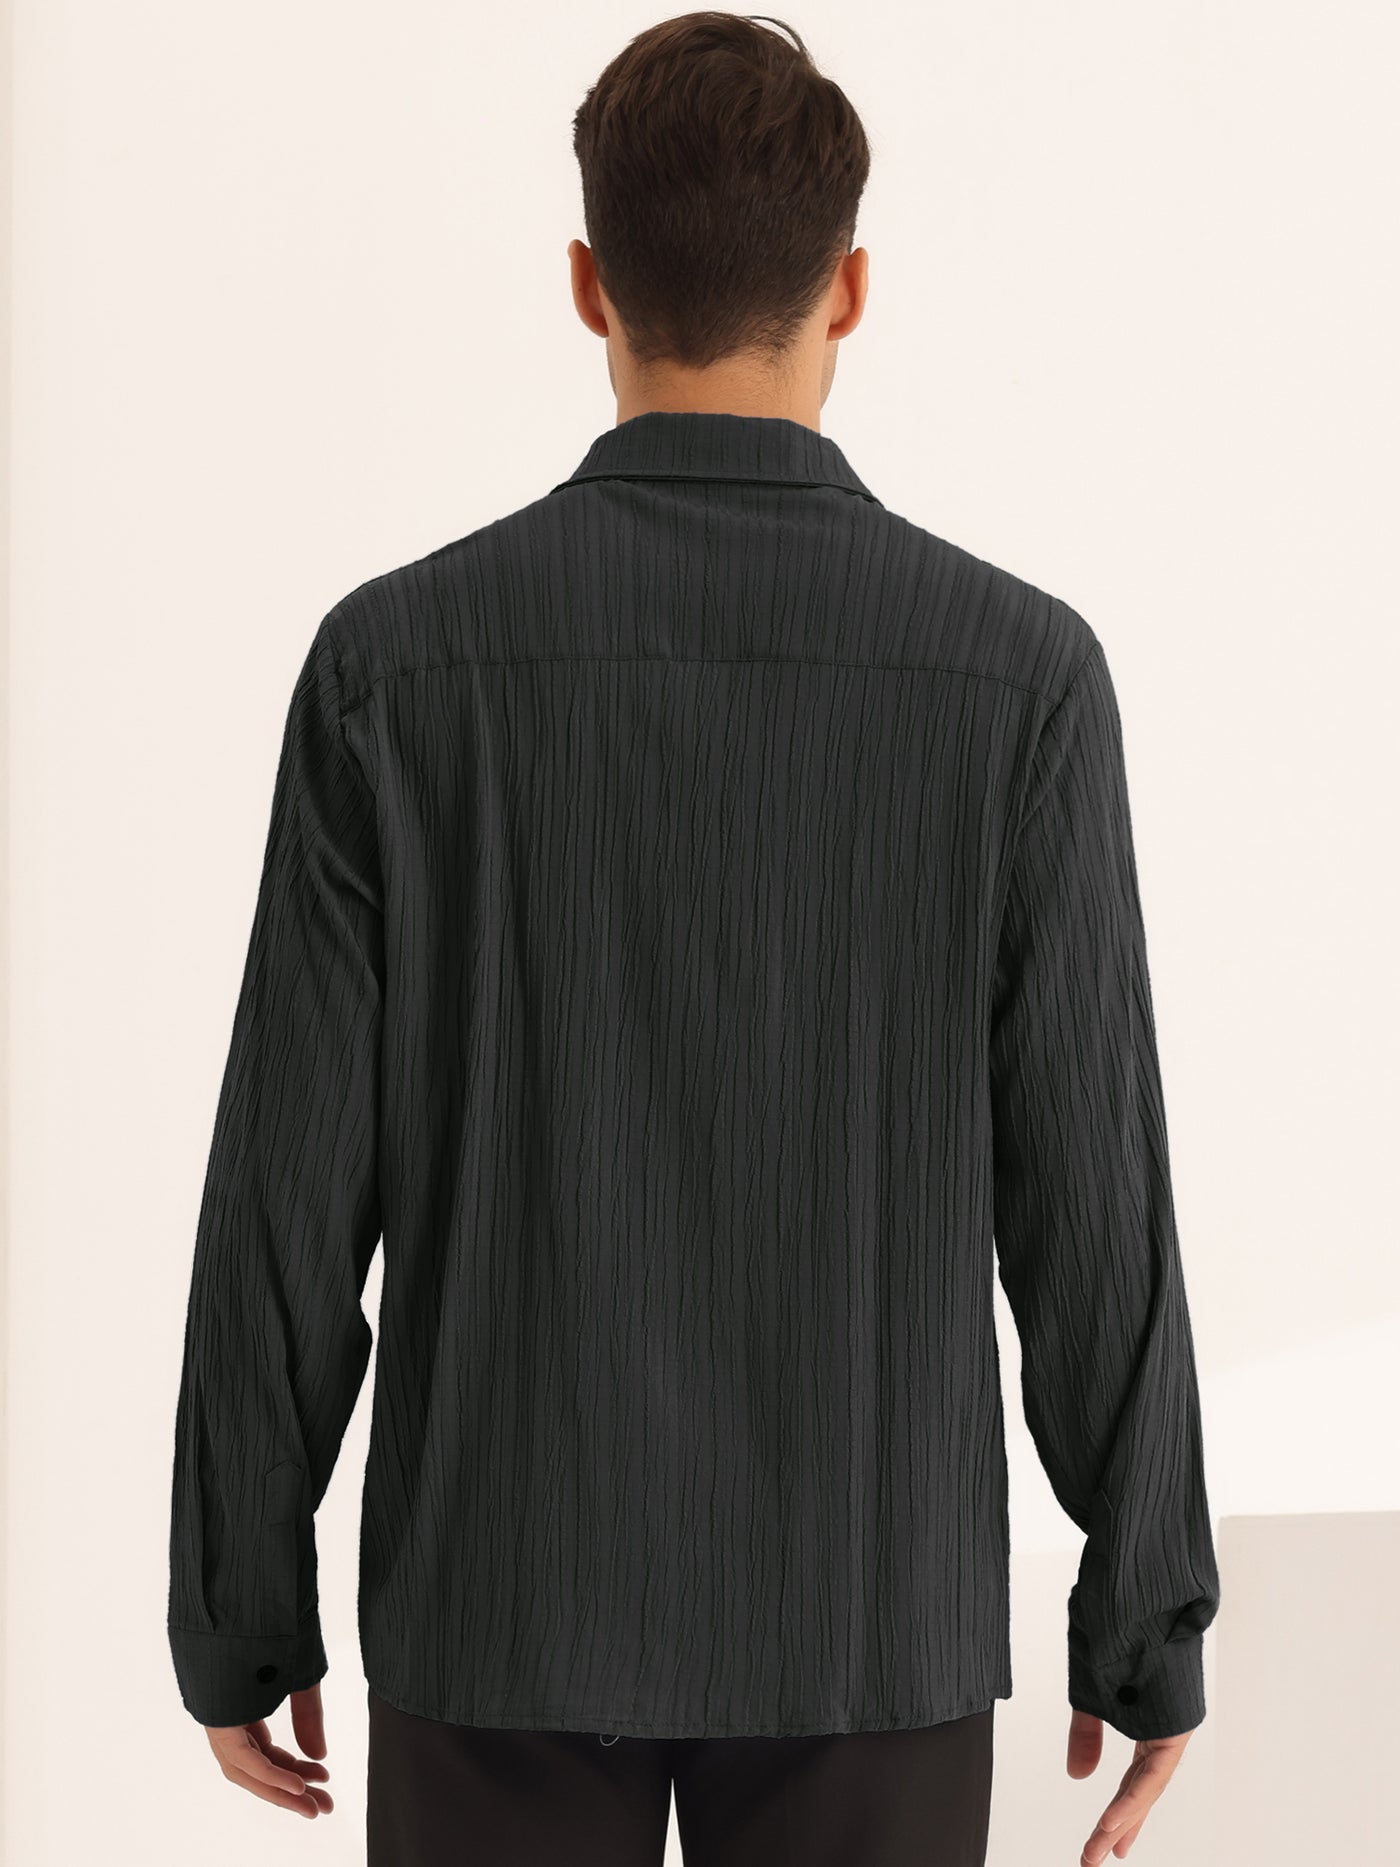 Bublédon Texture Dress Shirts for Men's Button Closure Long Sleeves Formal Pleats Shirt